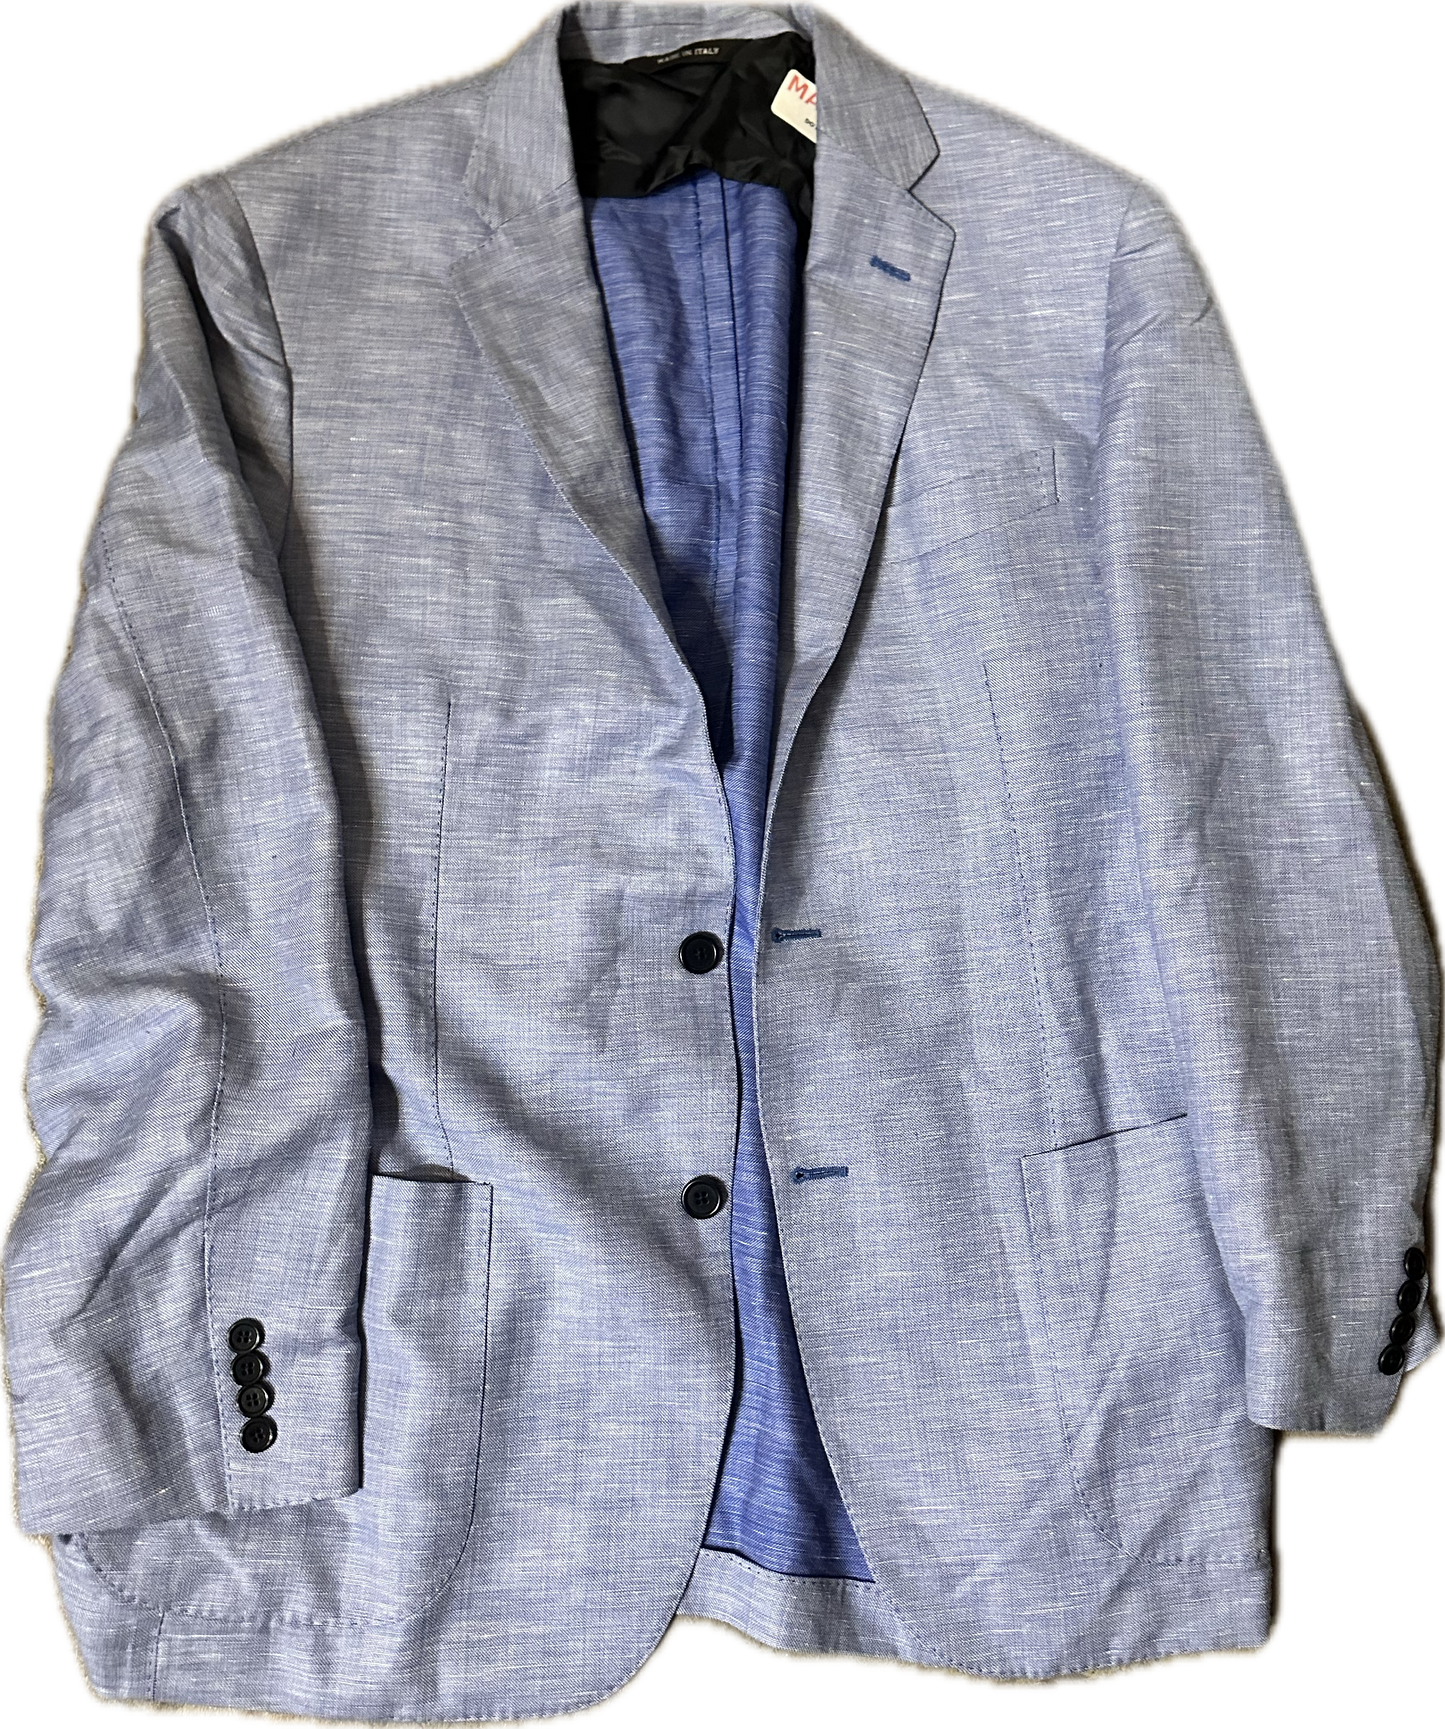 MAD MEN: Donald Draper's 1960s style Light Blue Italian made Sport Coat  (42)